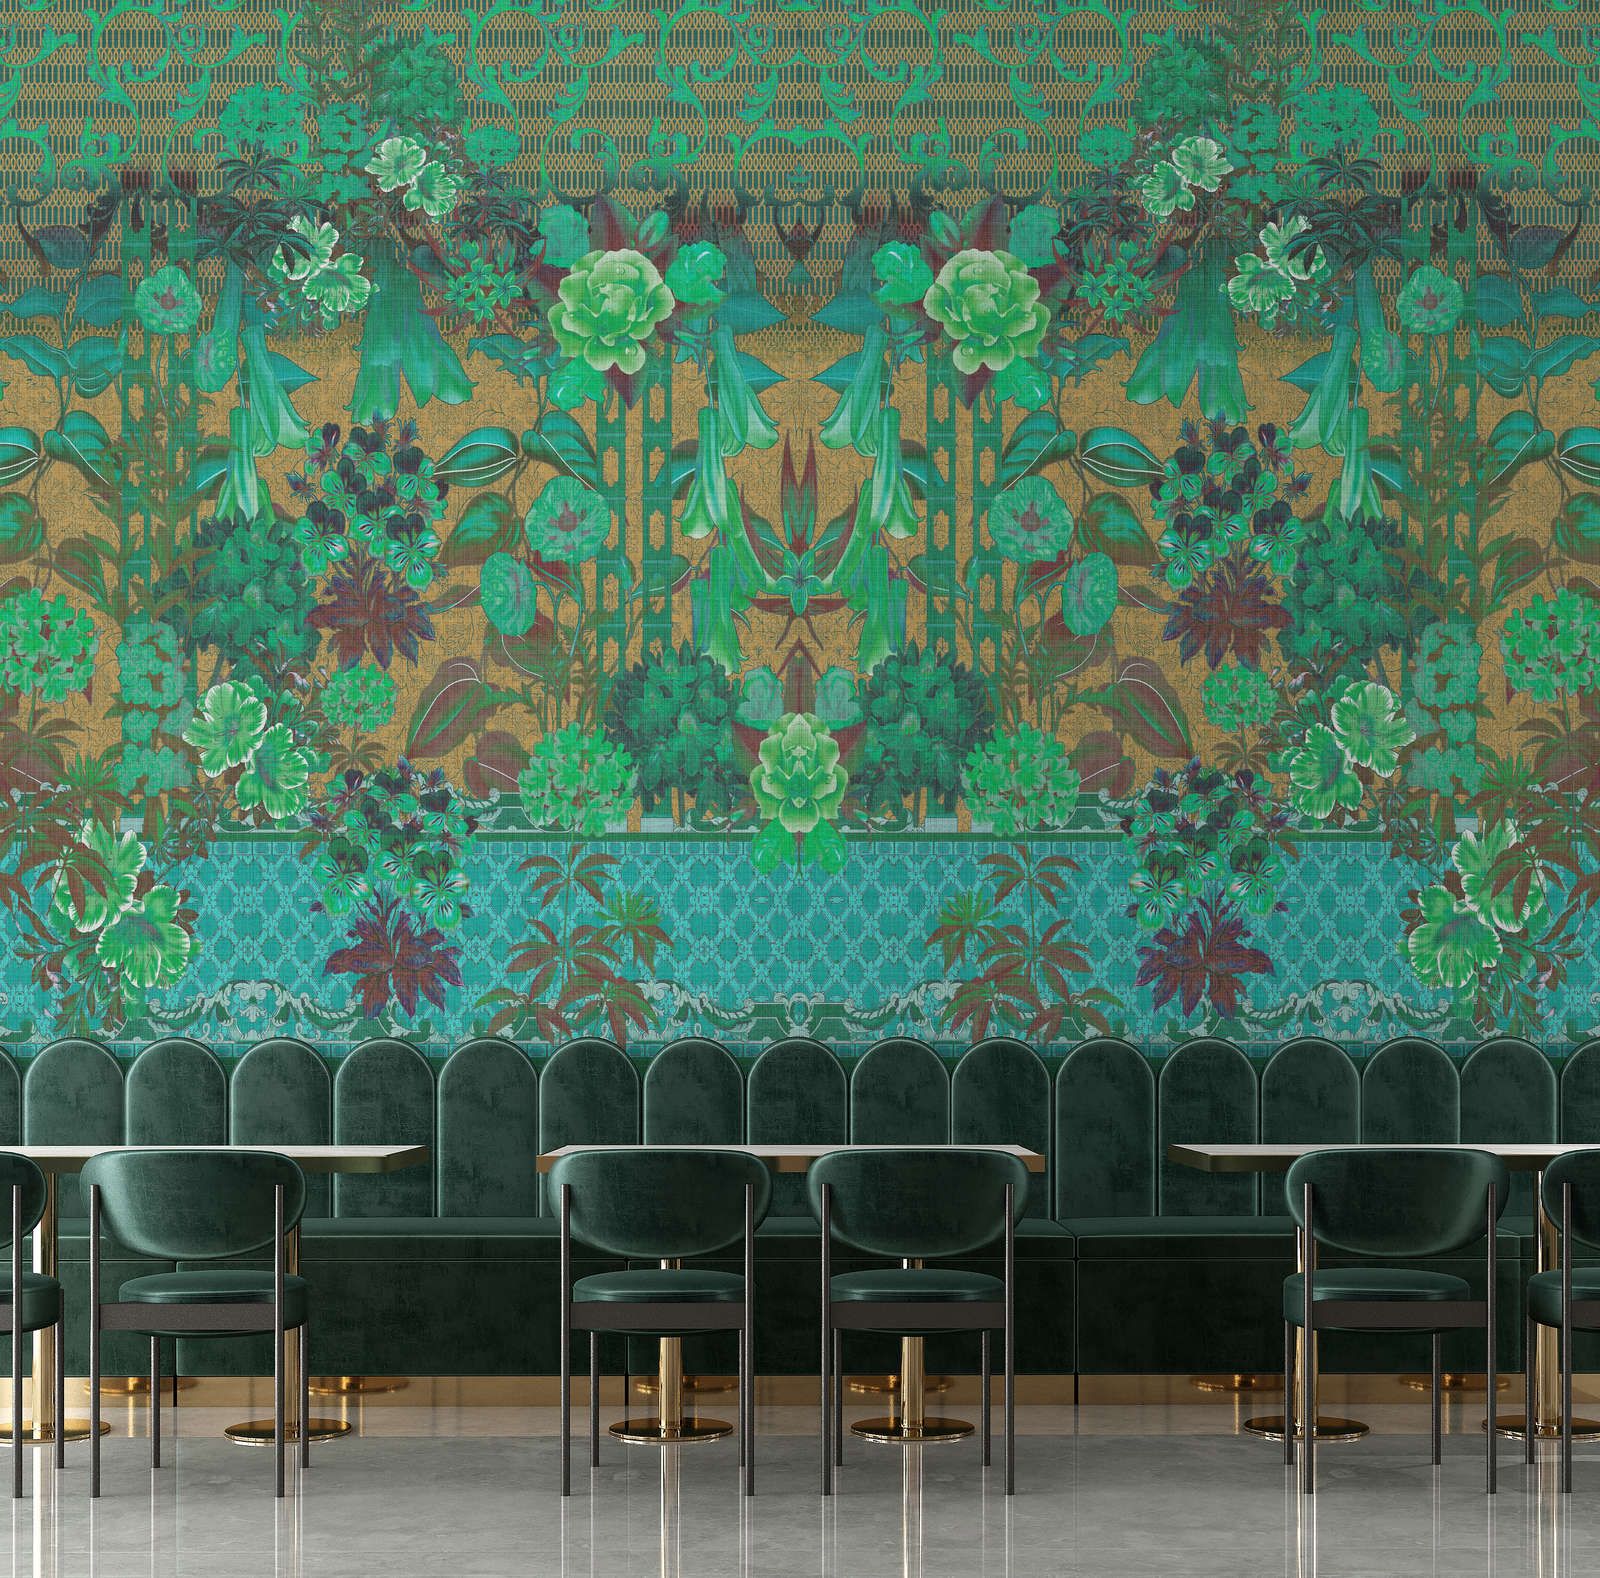             Photo wallpaper »sati 2« - Floral design & ornaments with linen structure look - Green | matt, smooth non-woven
        